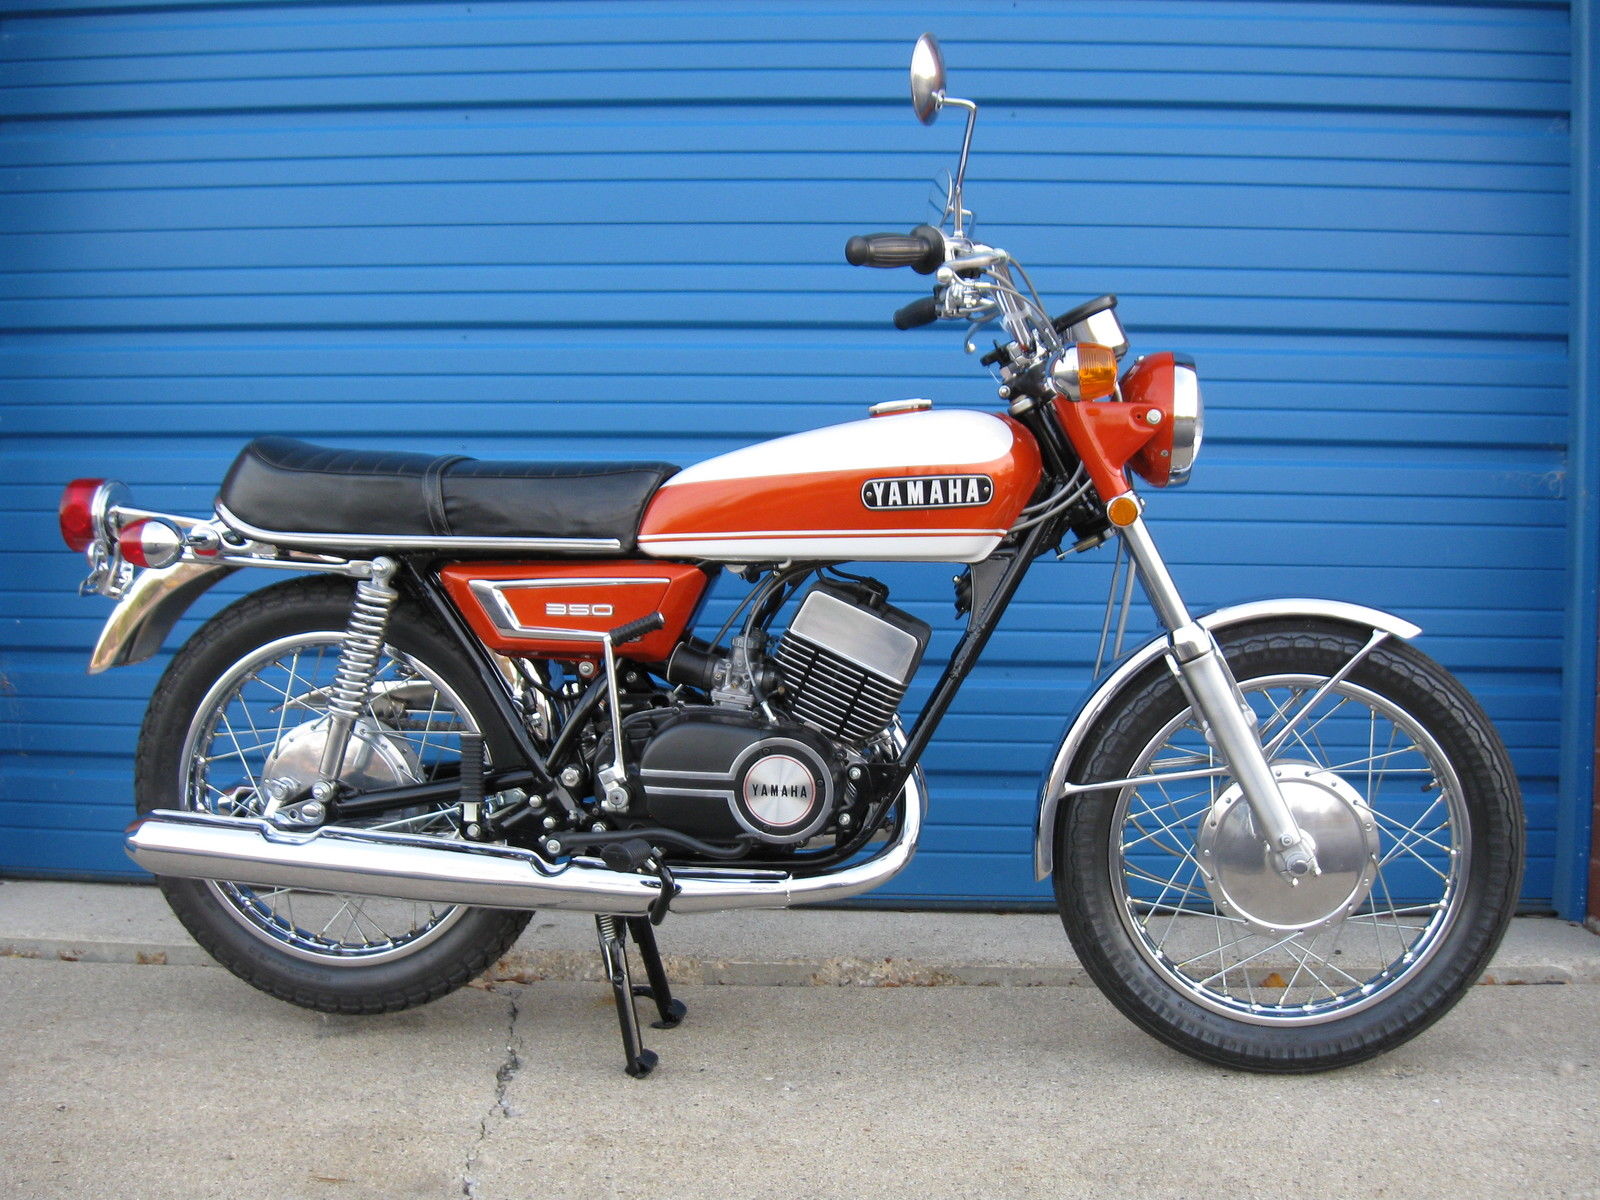 Restored Yamaha R5 350 - 1971 Photographs at Classic Bikes Restored ...